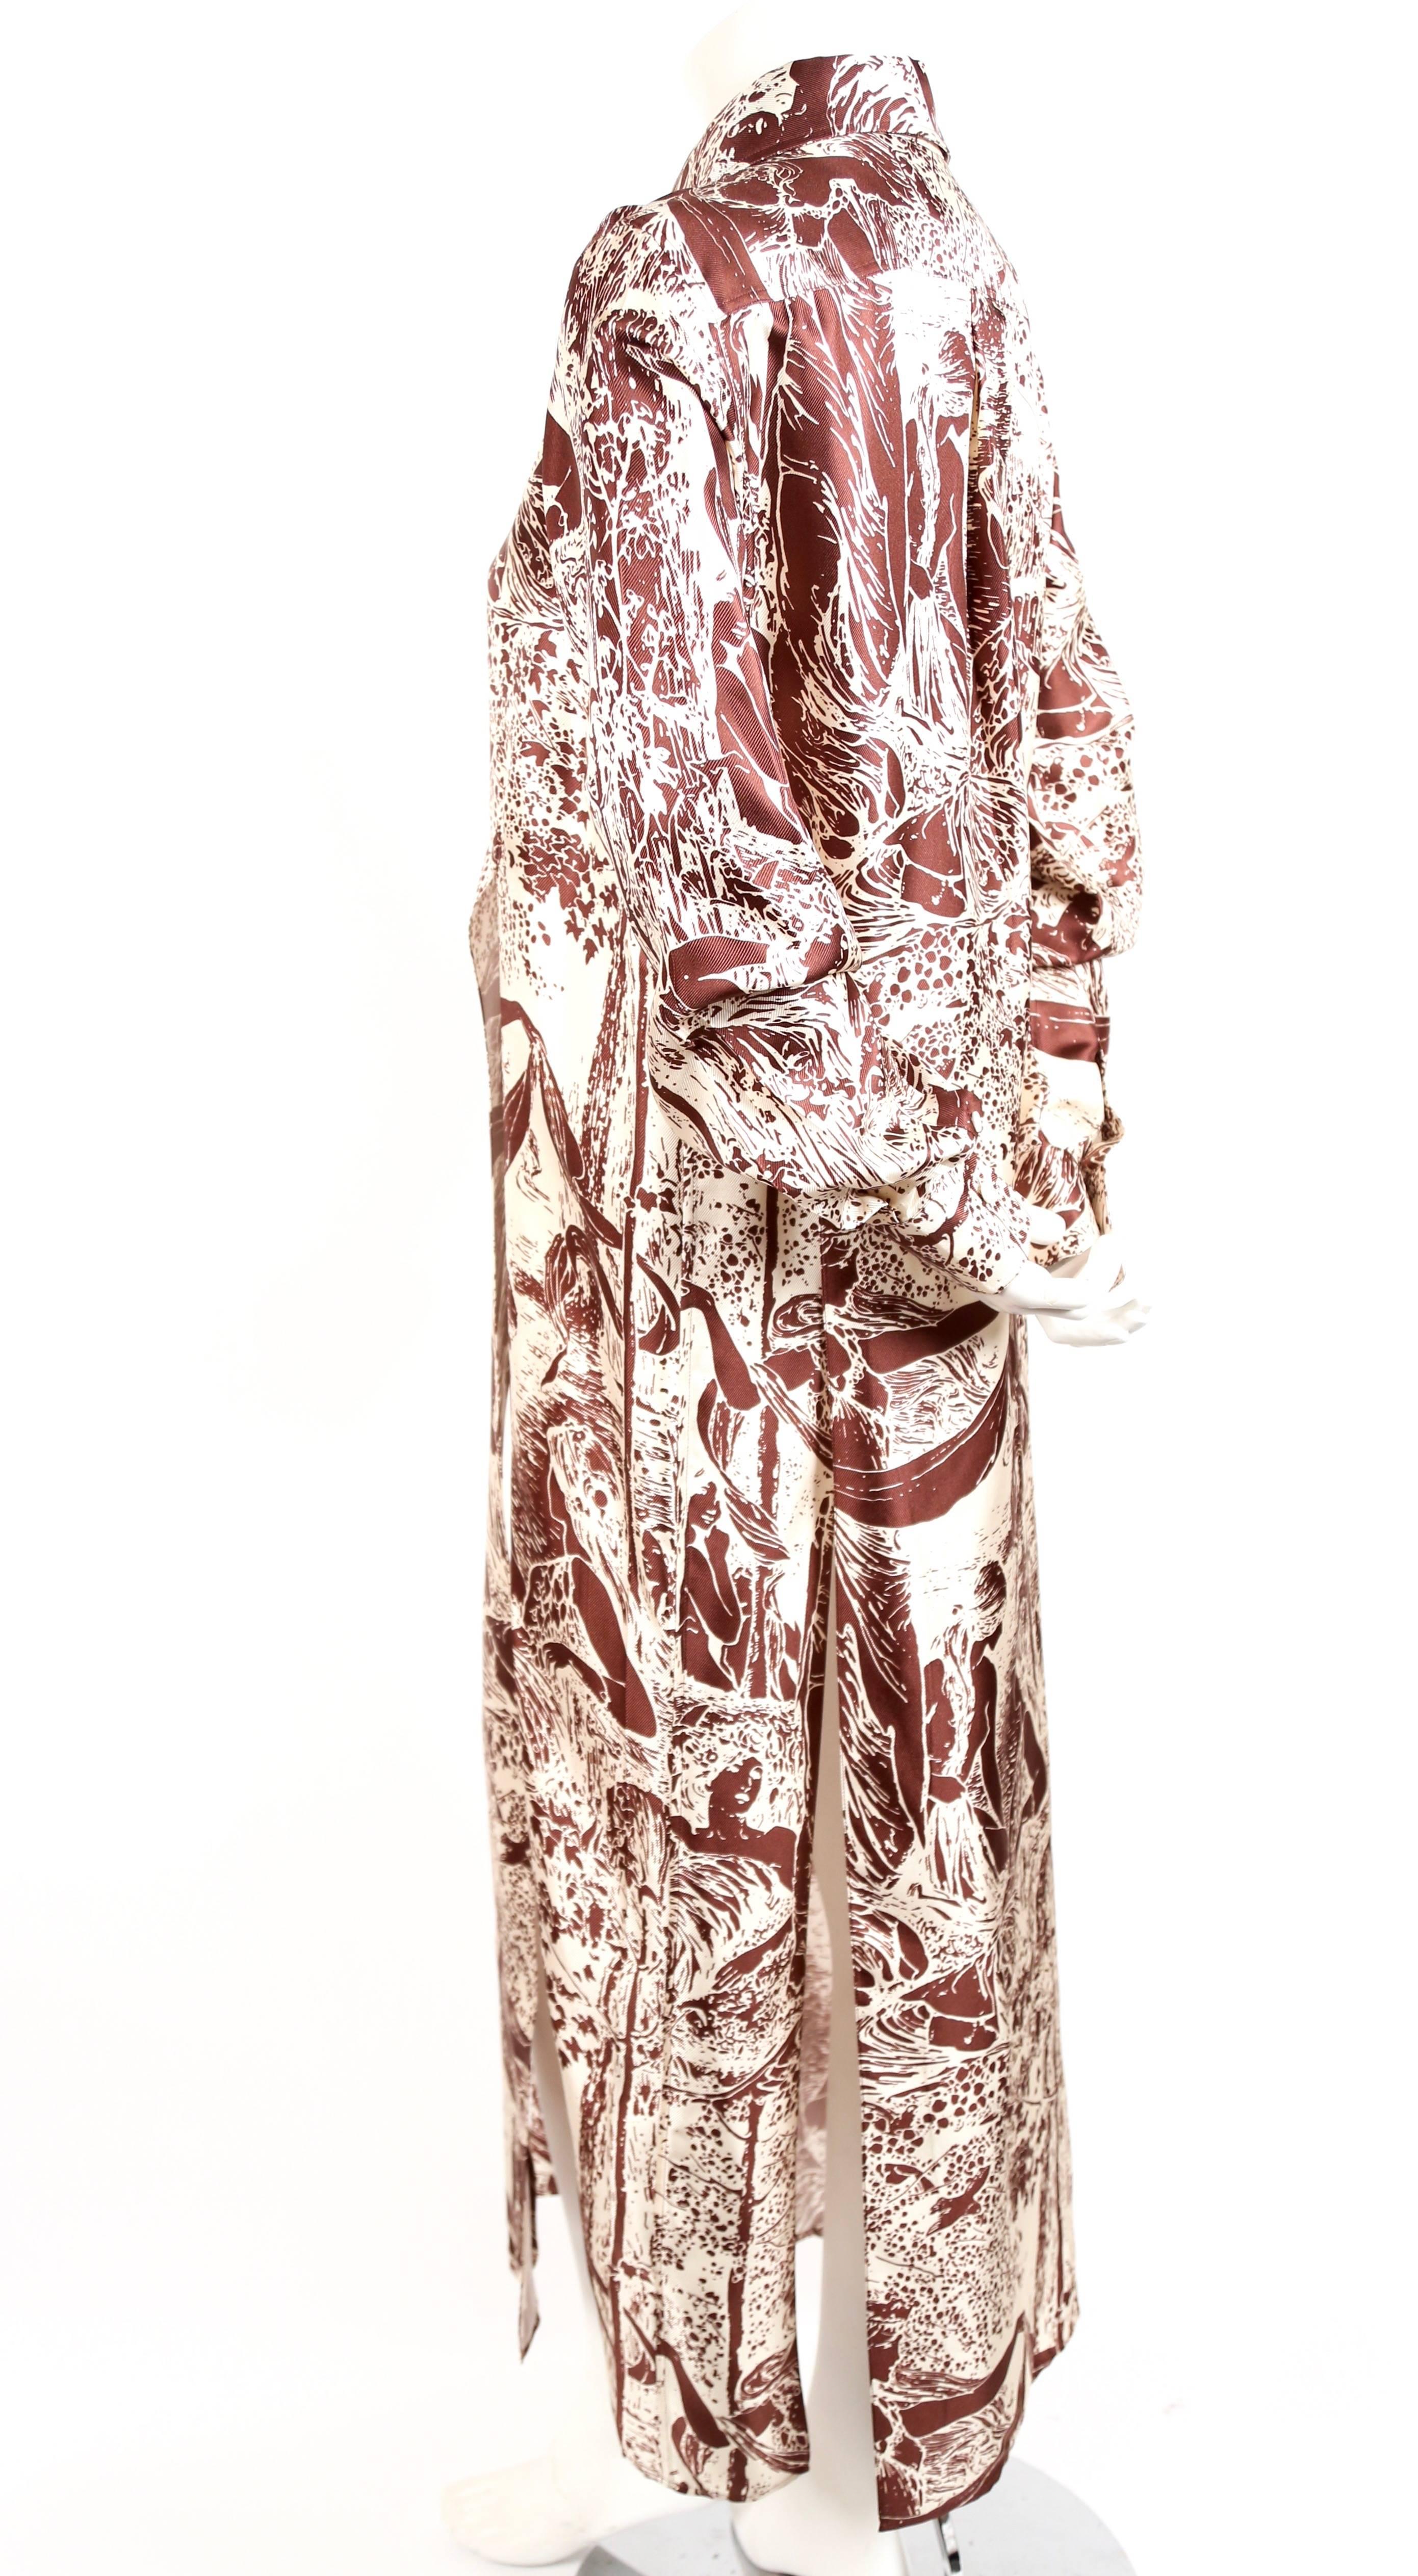 Beige Celine by Phoebe Philo printed runway dress with high slits